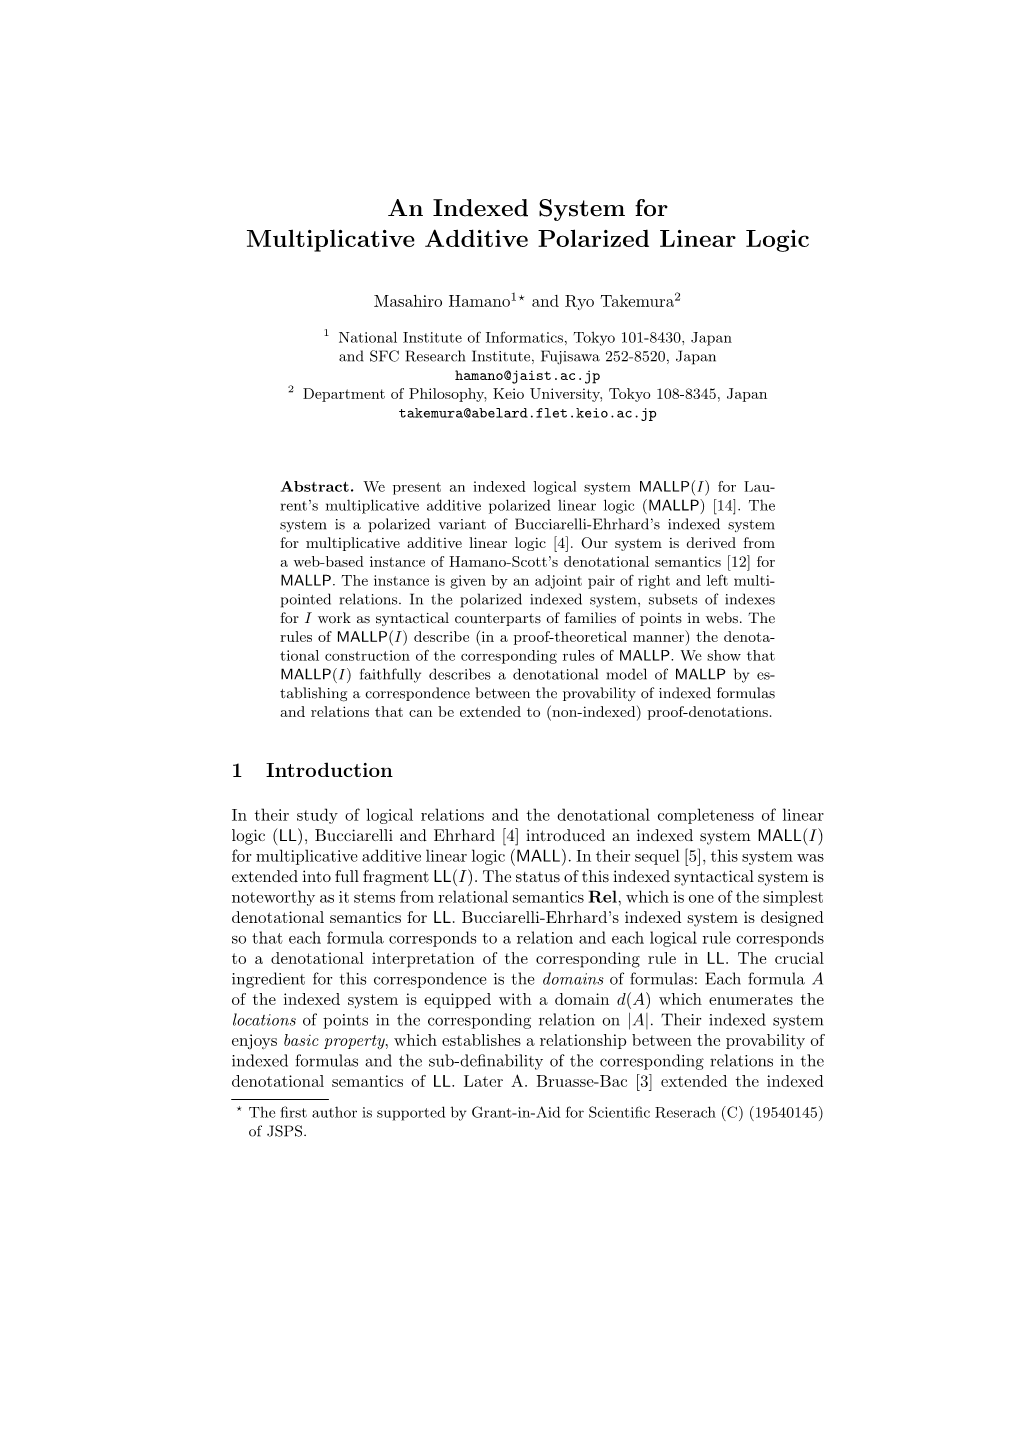 An Indexed System for Multiplicative Additive Polarized Linear Logic